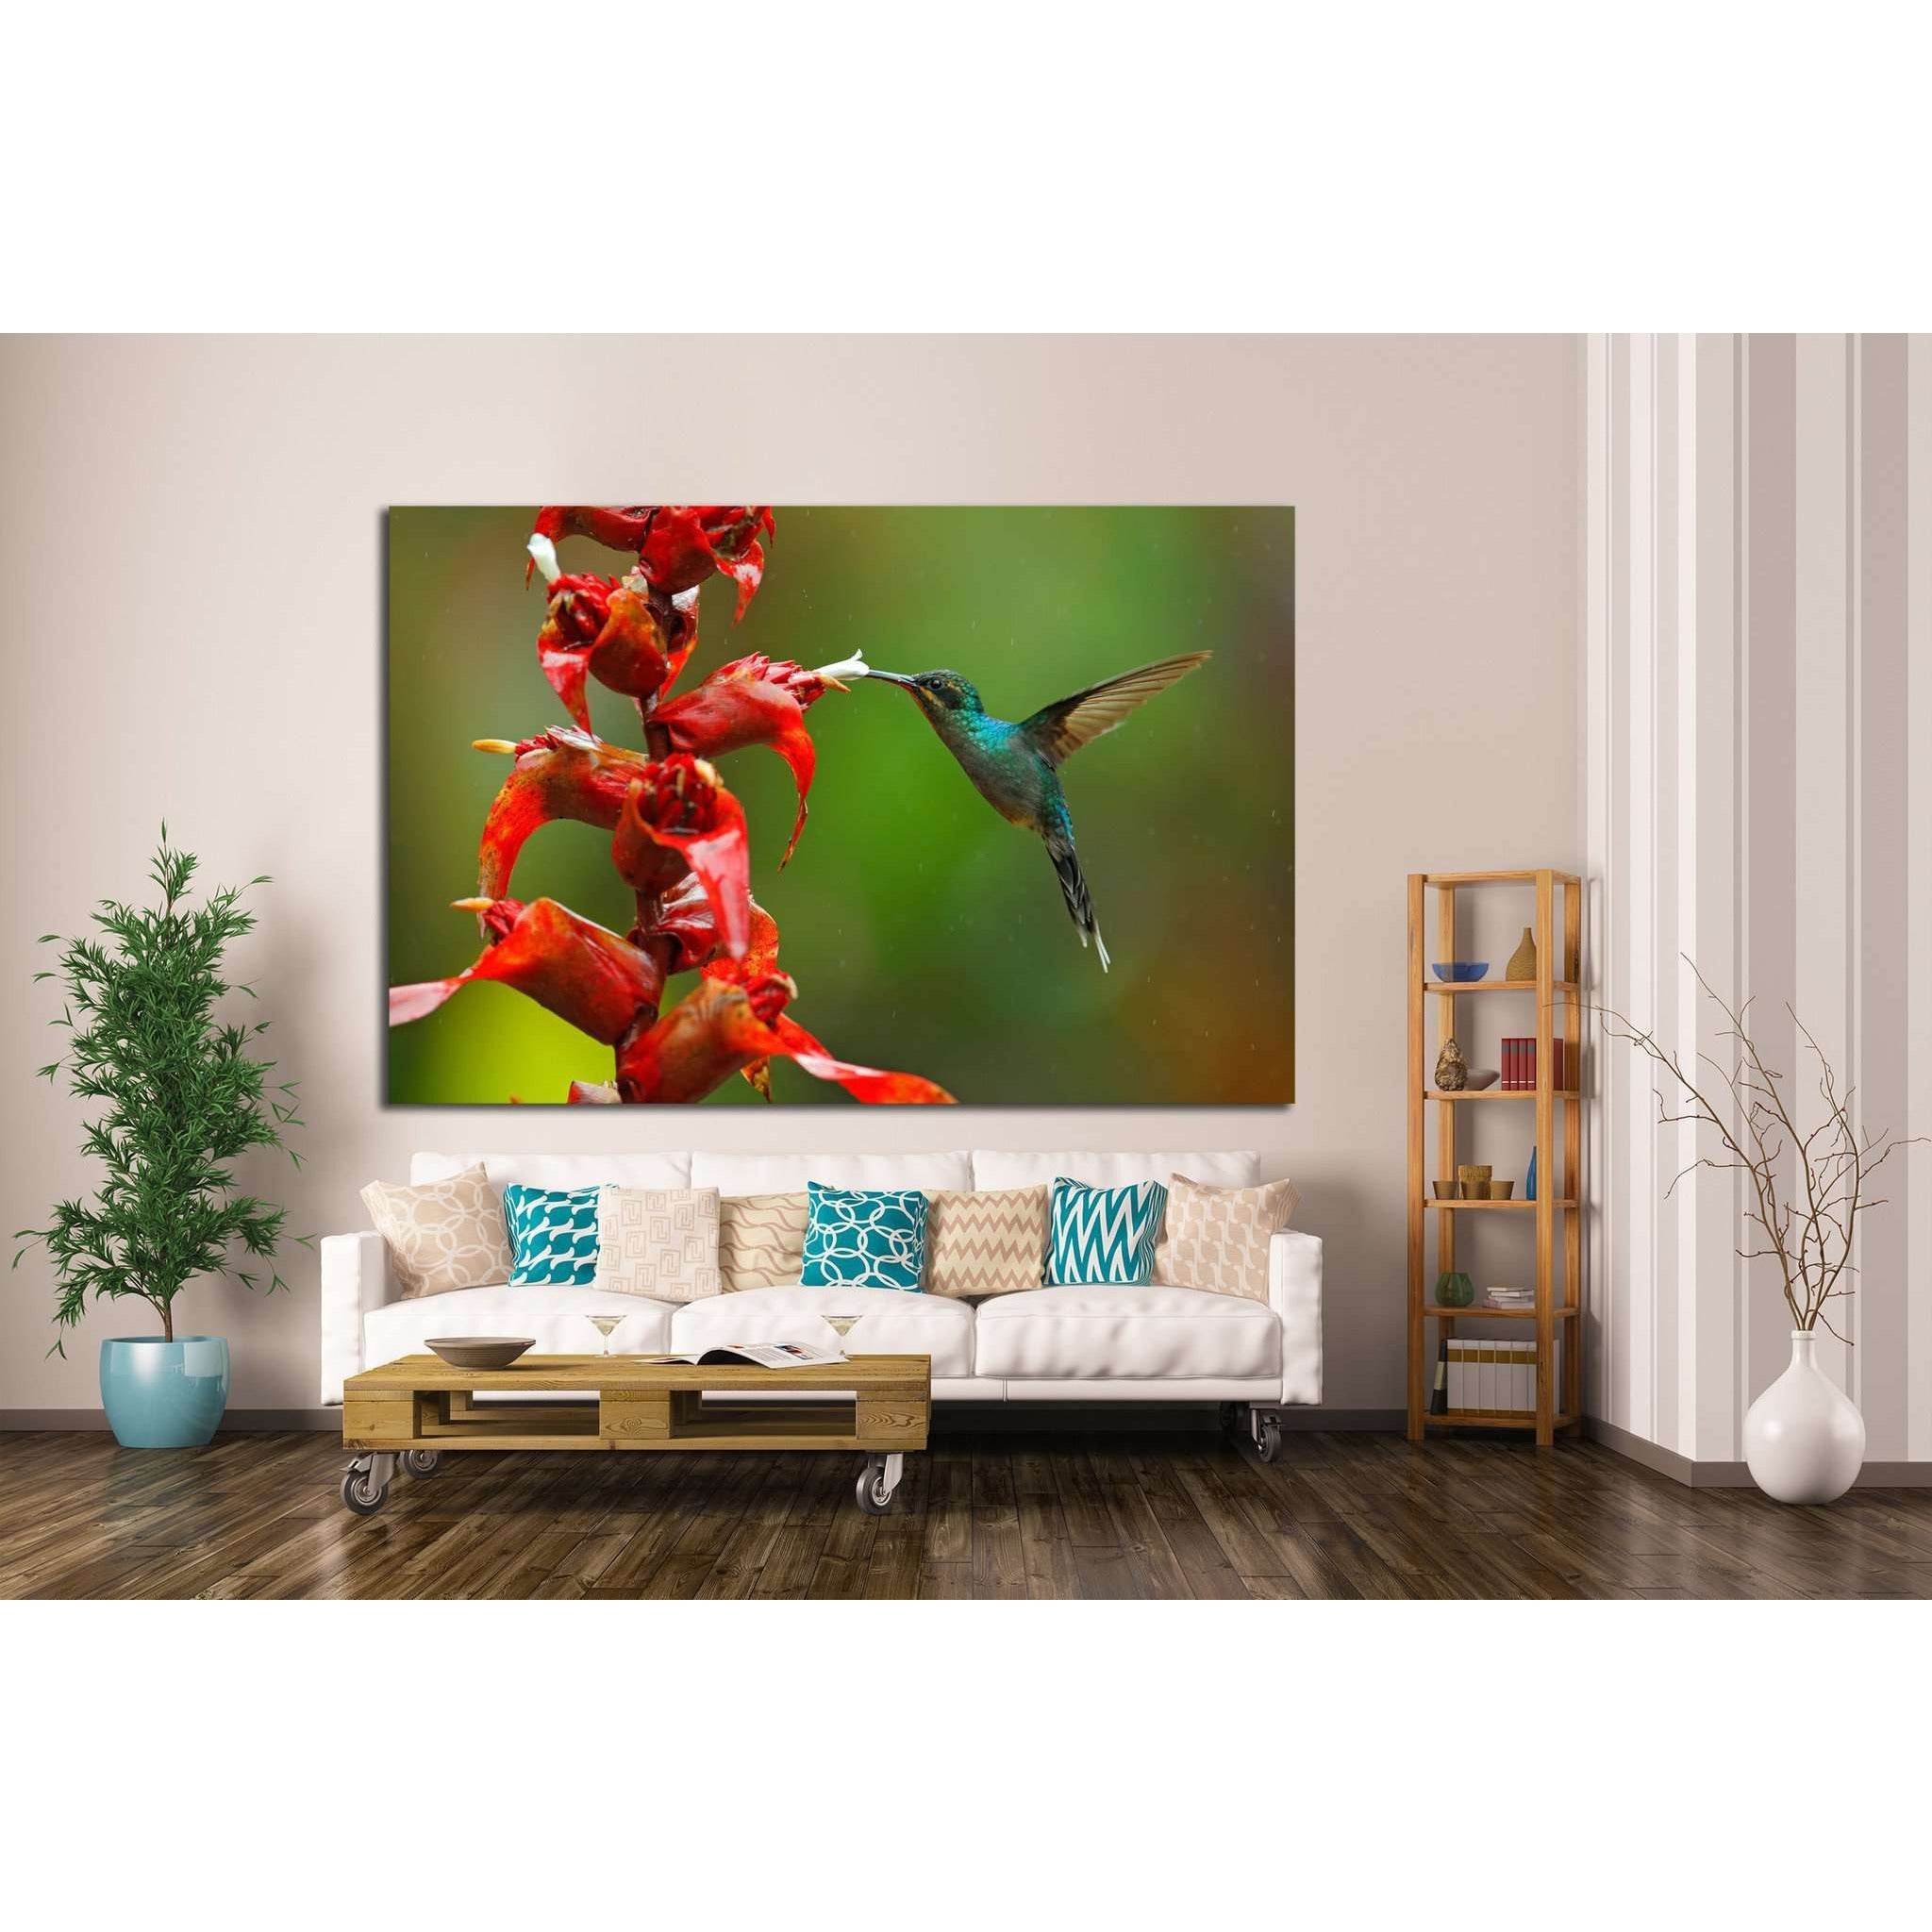 Rare hummingbird from Costa Rica №1445 Ready to Hang Canvas Print